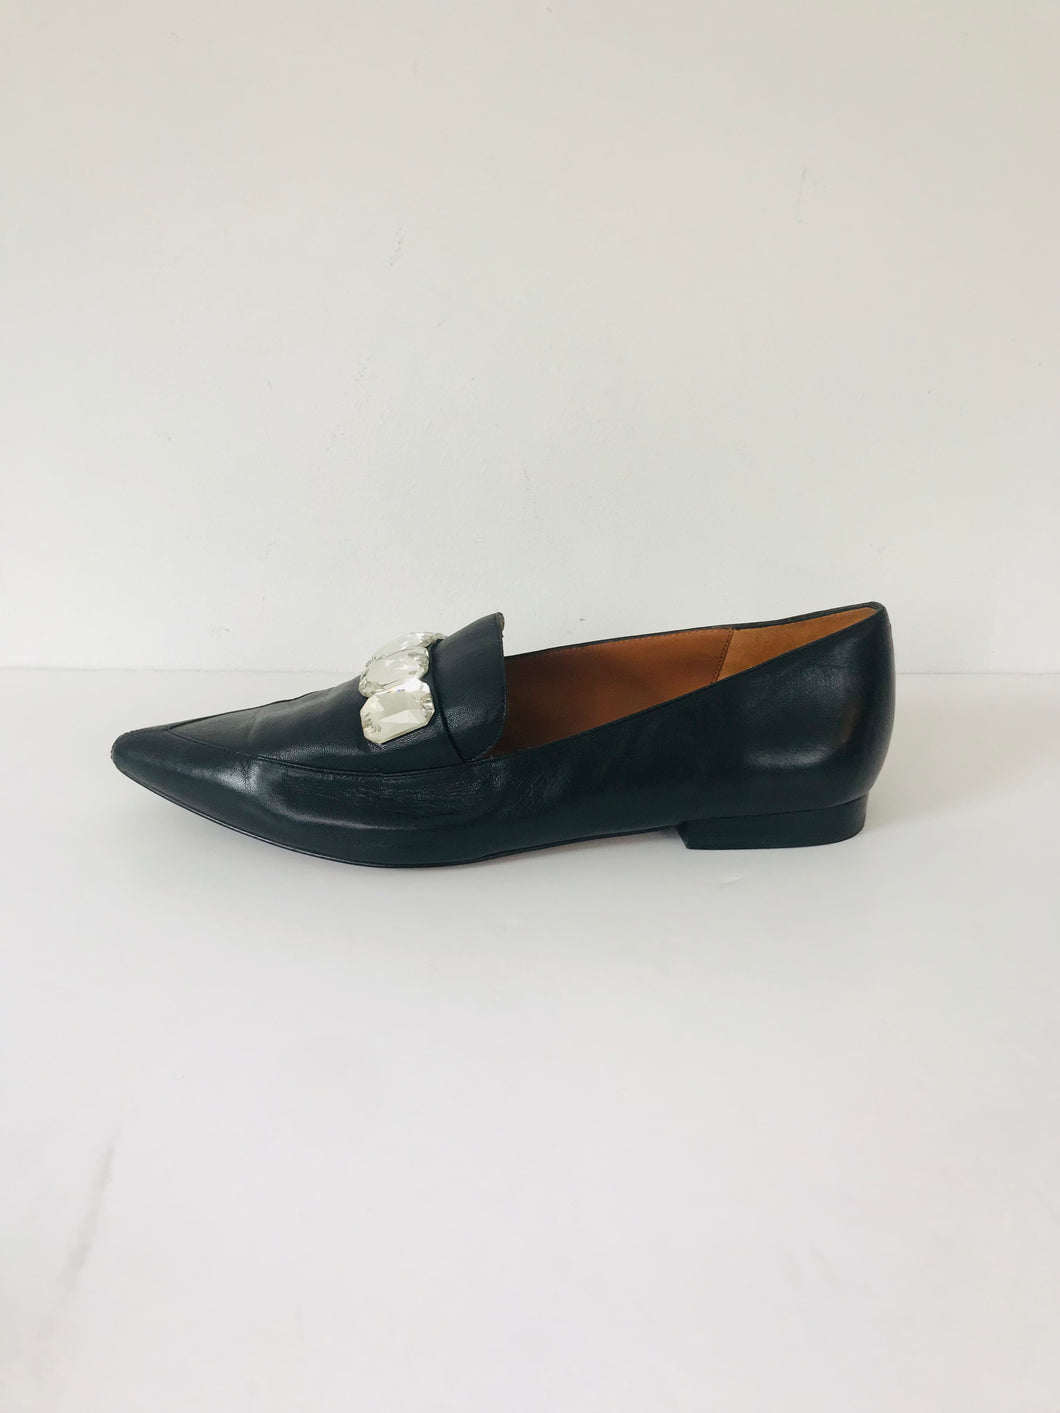 & Other Stories Women's Embellished Leather Slip-on Loafers | 39 UK6 | Black